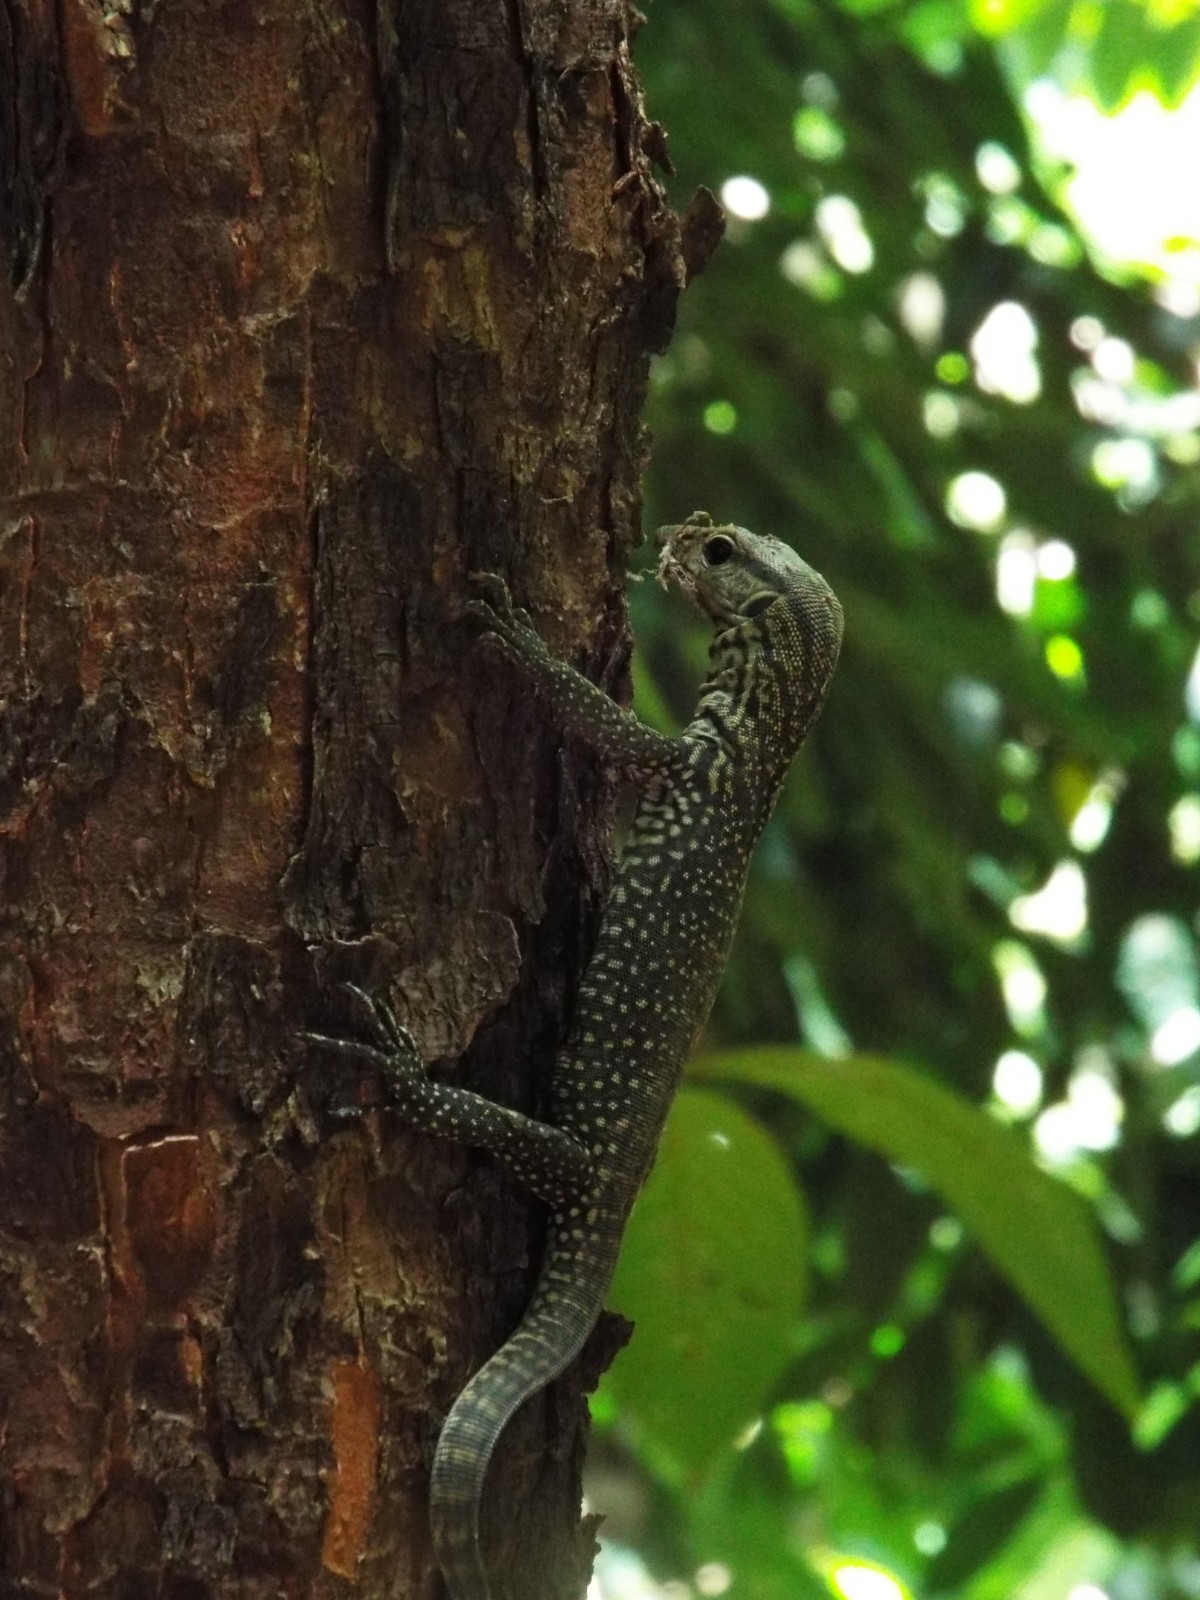 Lizard climbing up the tree